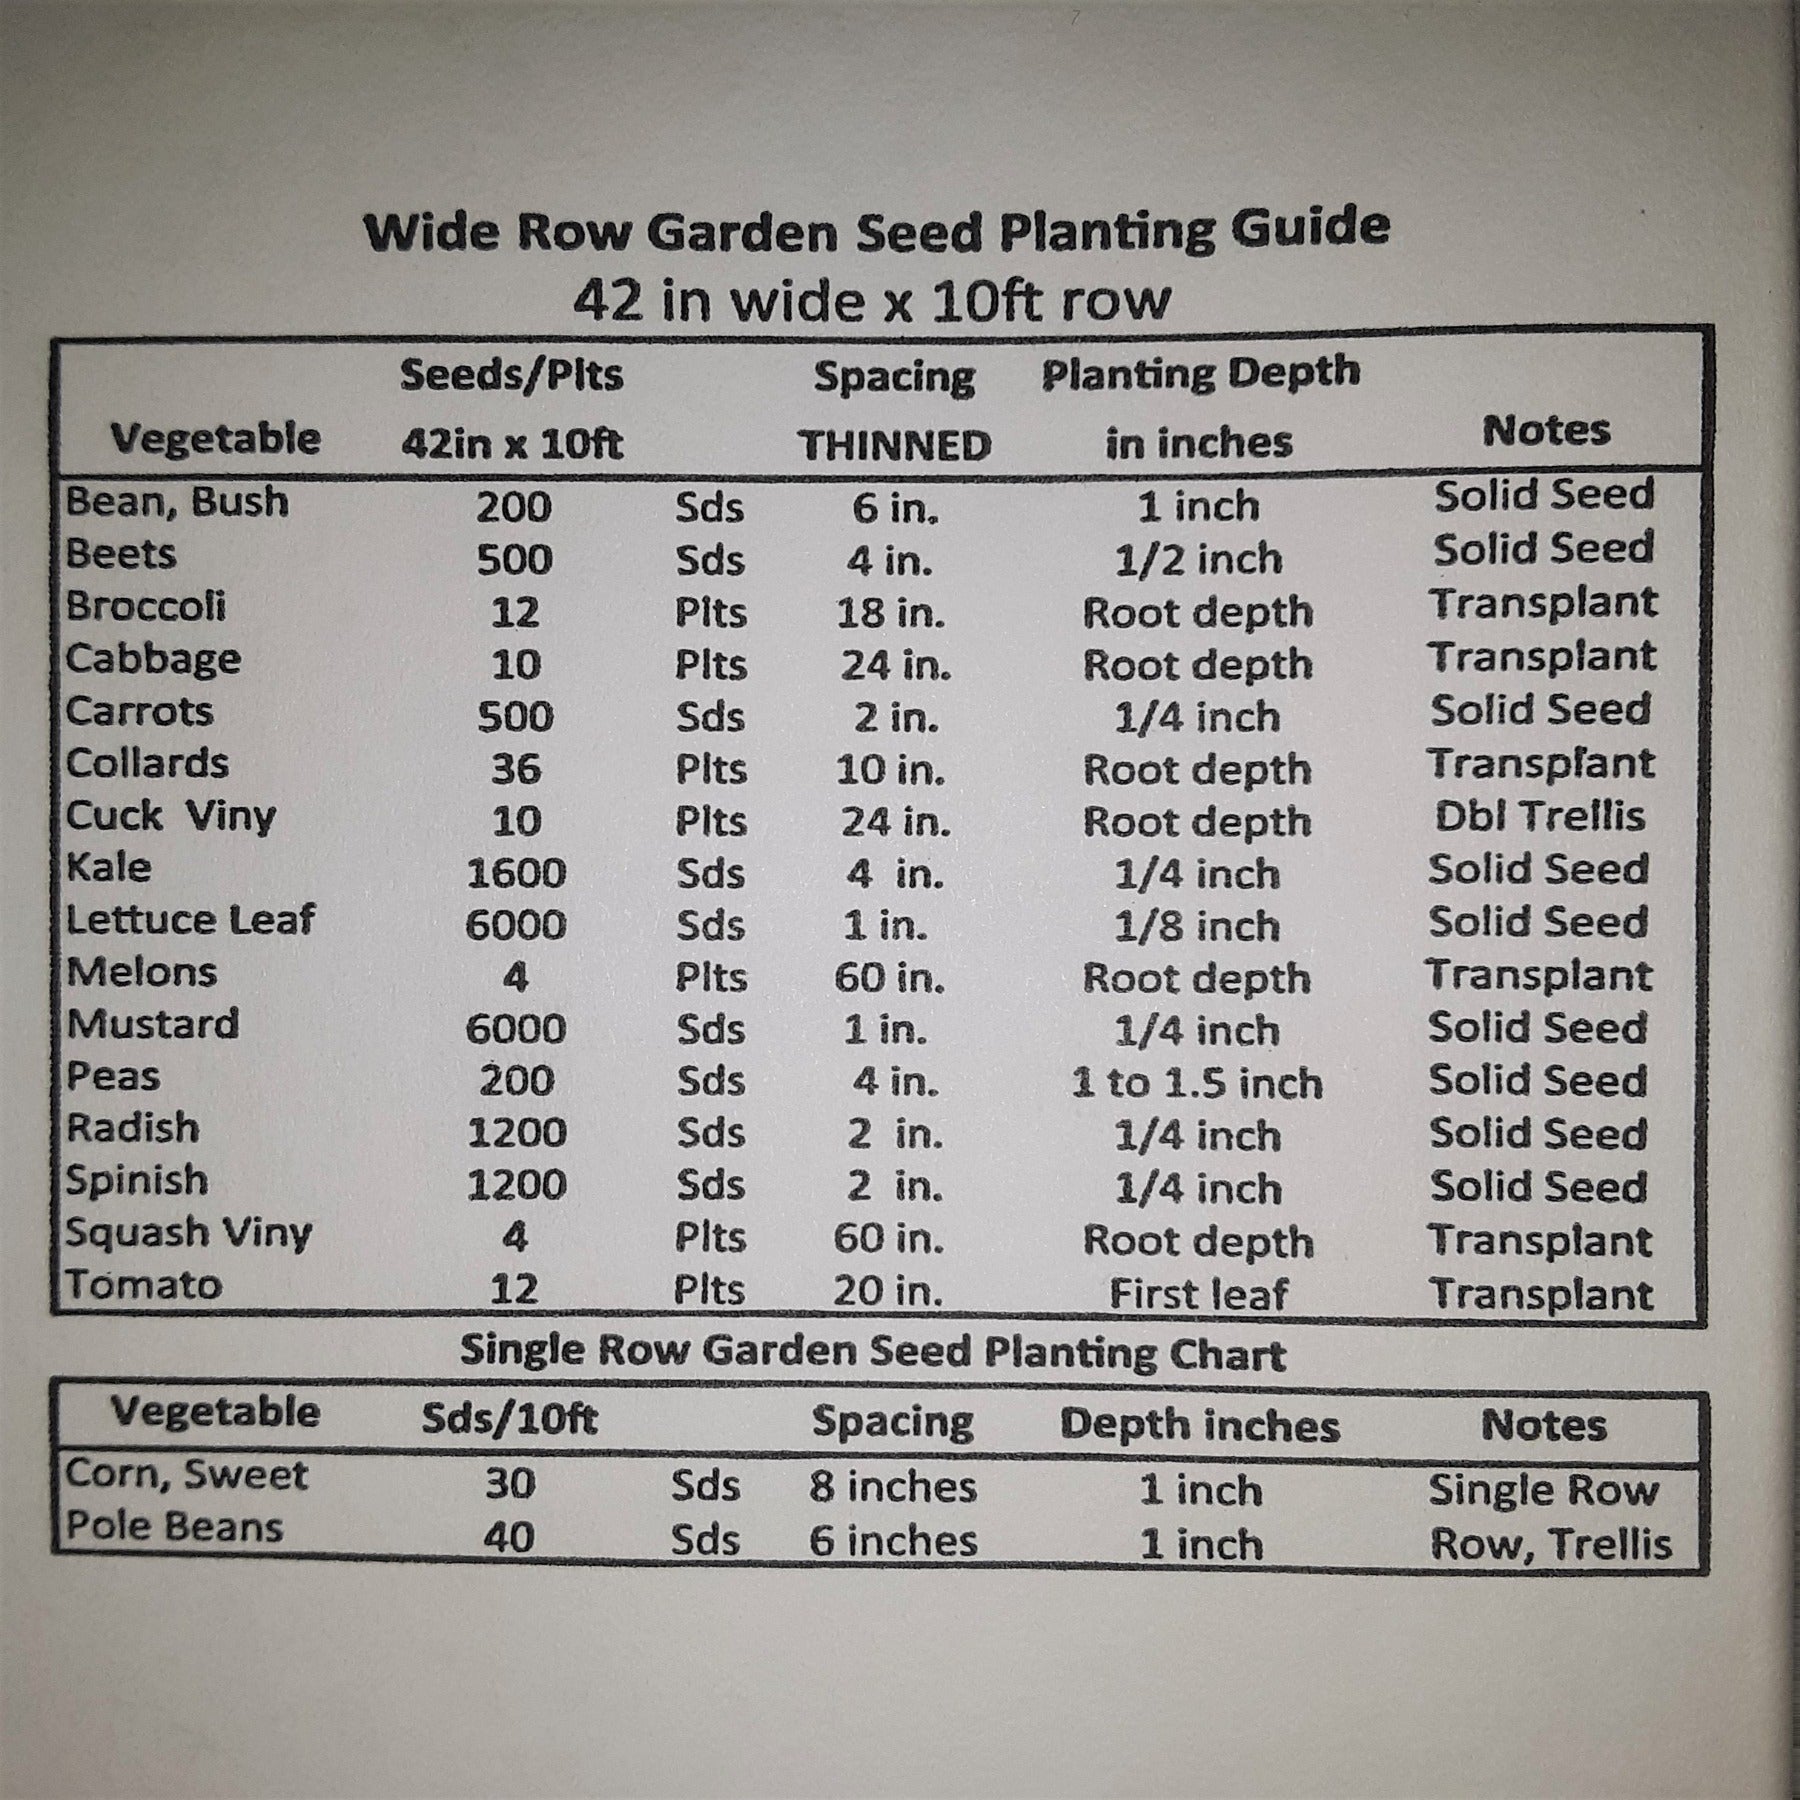 White Egg Heirloom Turnip Seeds